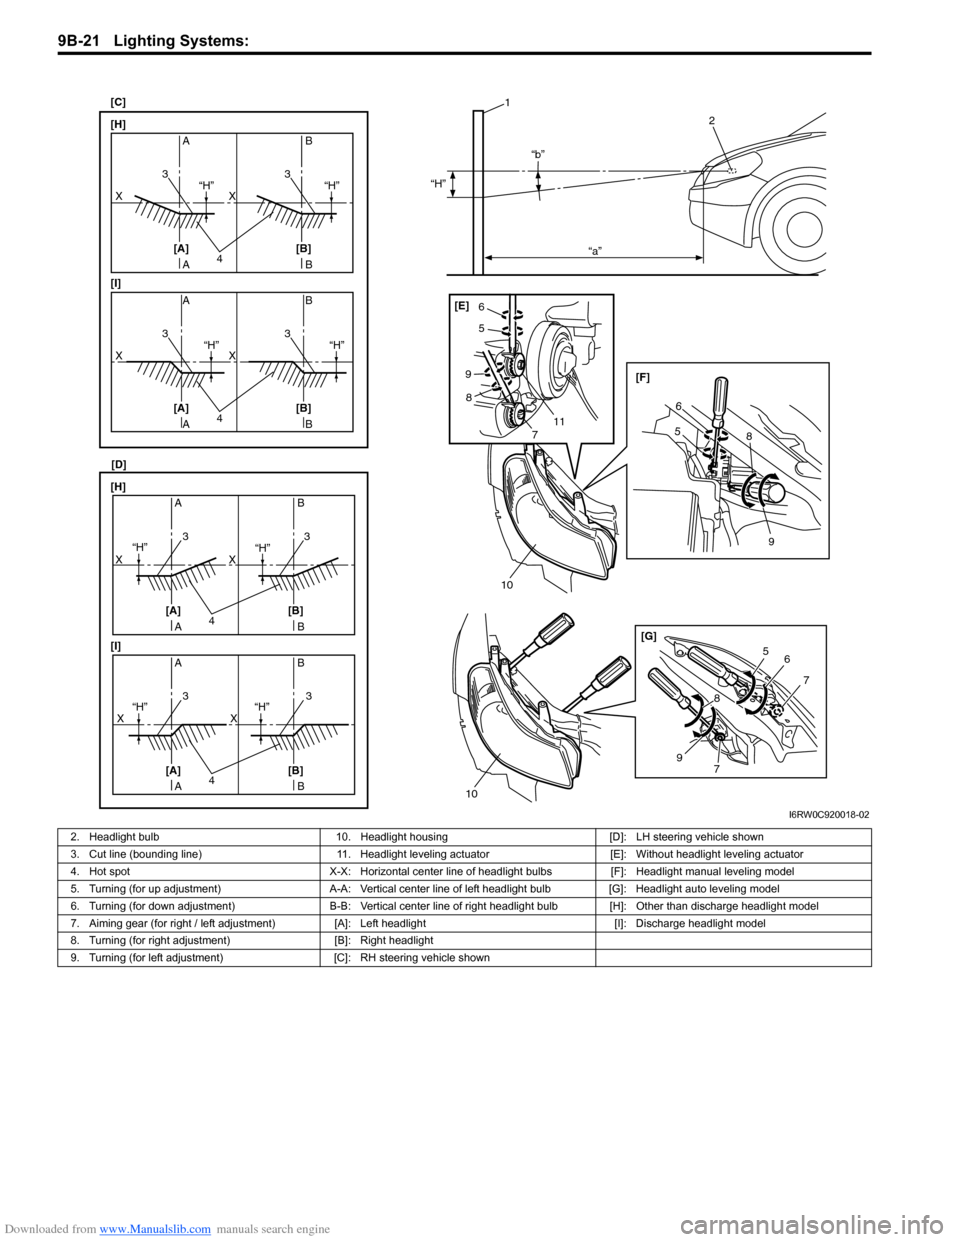 SUZUKI SX4 2006 1.G Service Workshop Manual Downloaded from www.Manualslib.com manuals search engine 9B-21 Lighting Systems: 
1
“H”“b”
“a”
2
10
[G] [F] [E]
7
8
9
6
7
5
10
11 8 9
7
6
5
A
A4
3
B B
A
A4
B B
“H”
“H” “H”
“H